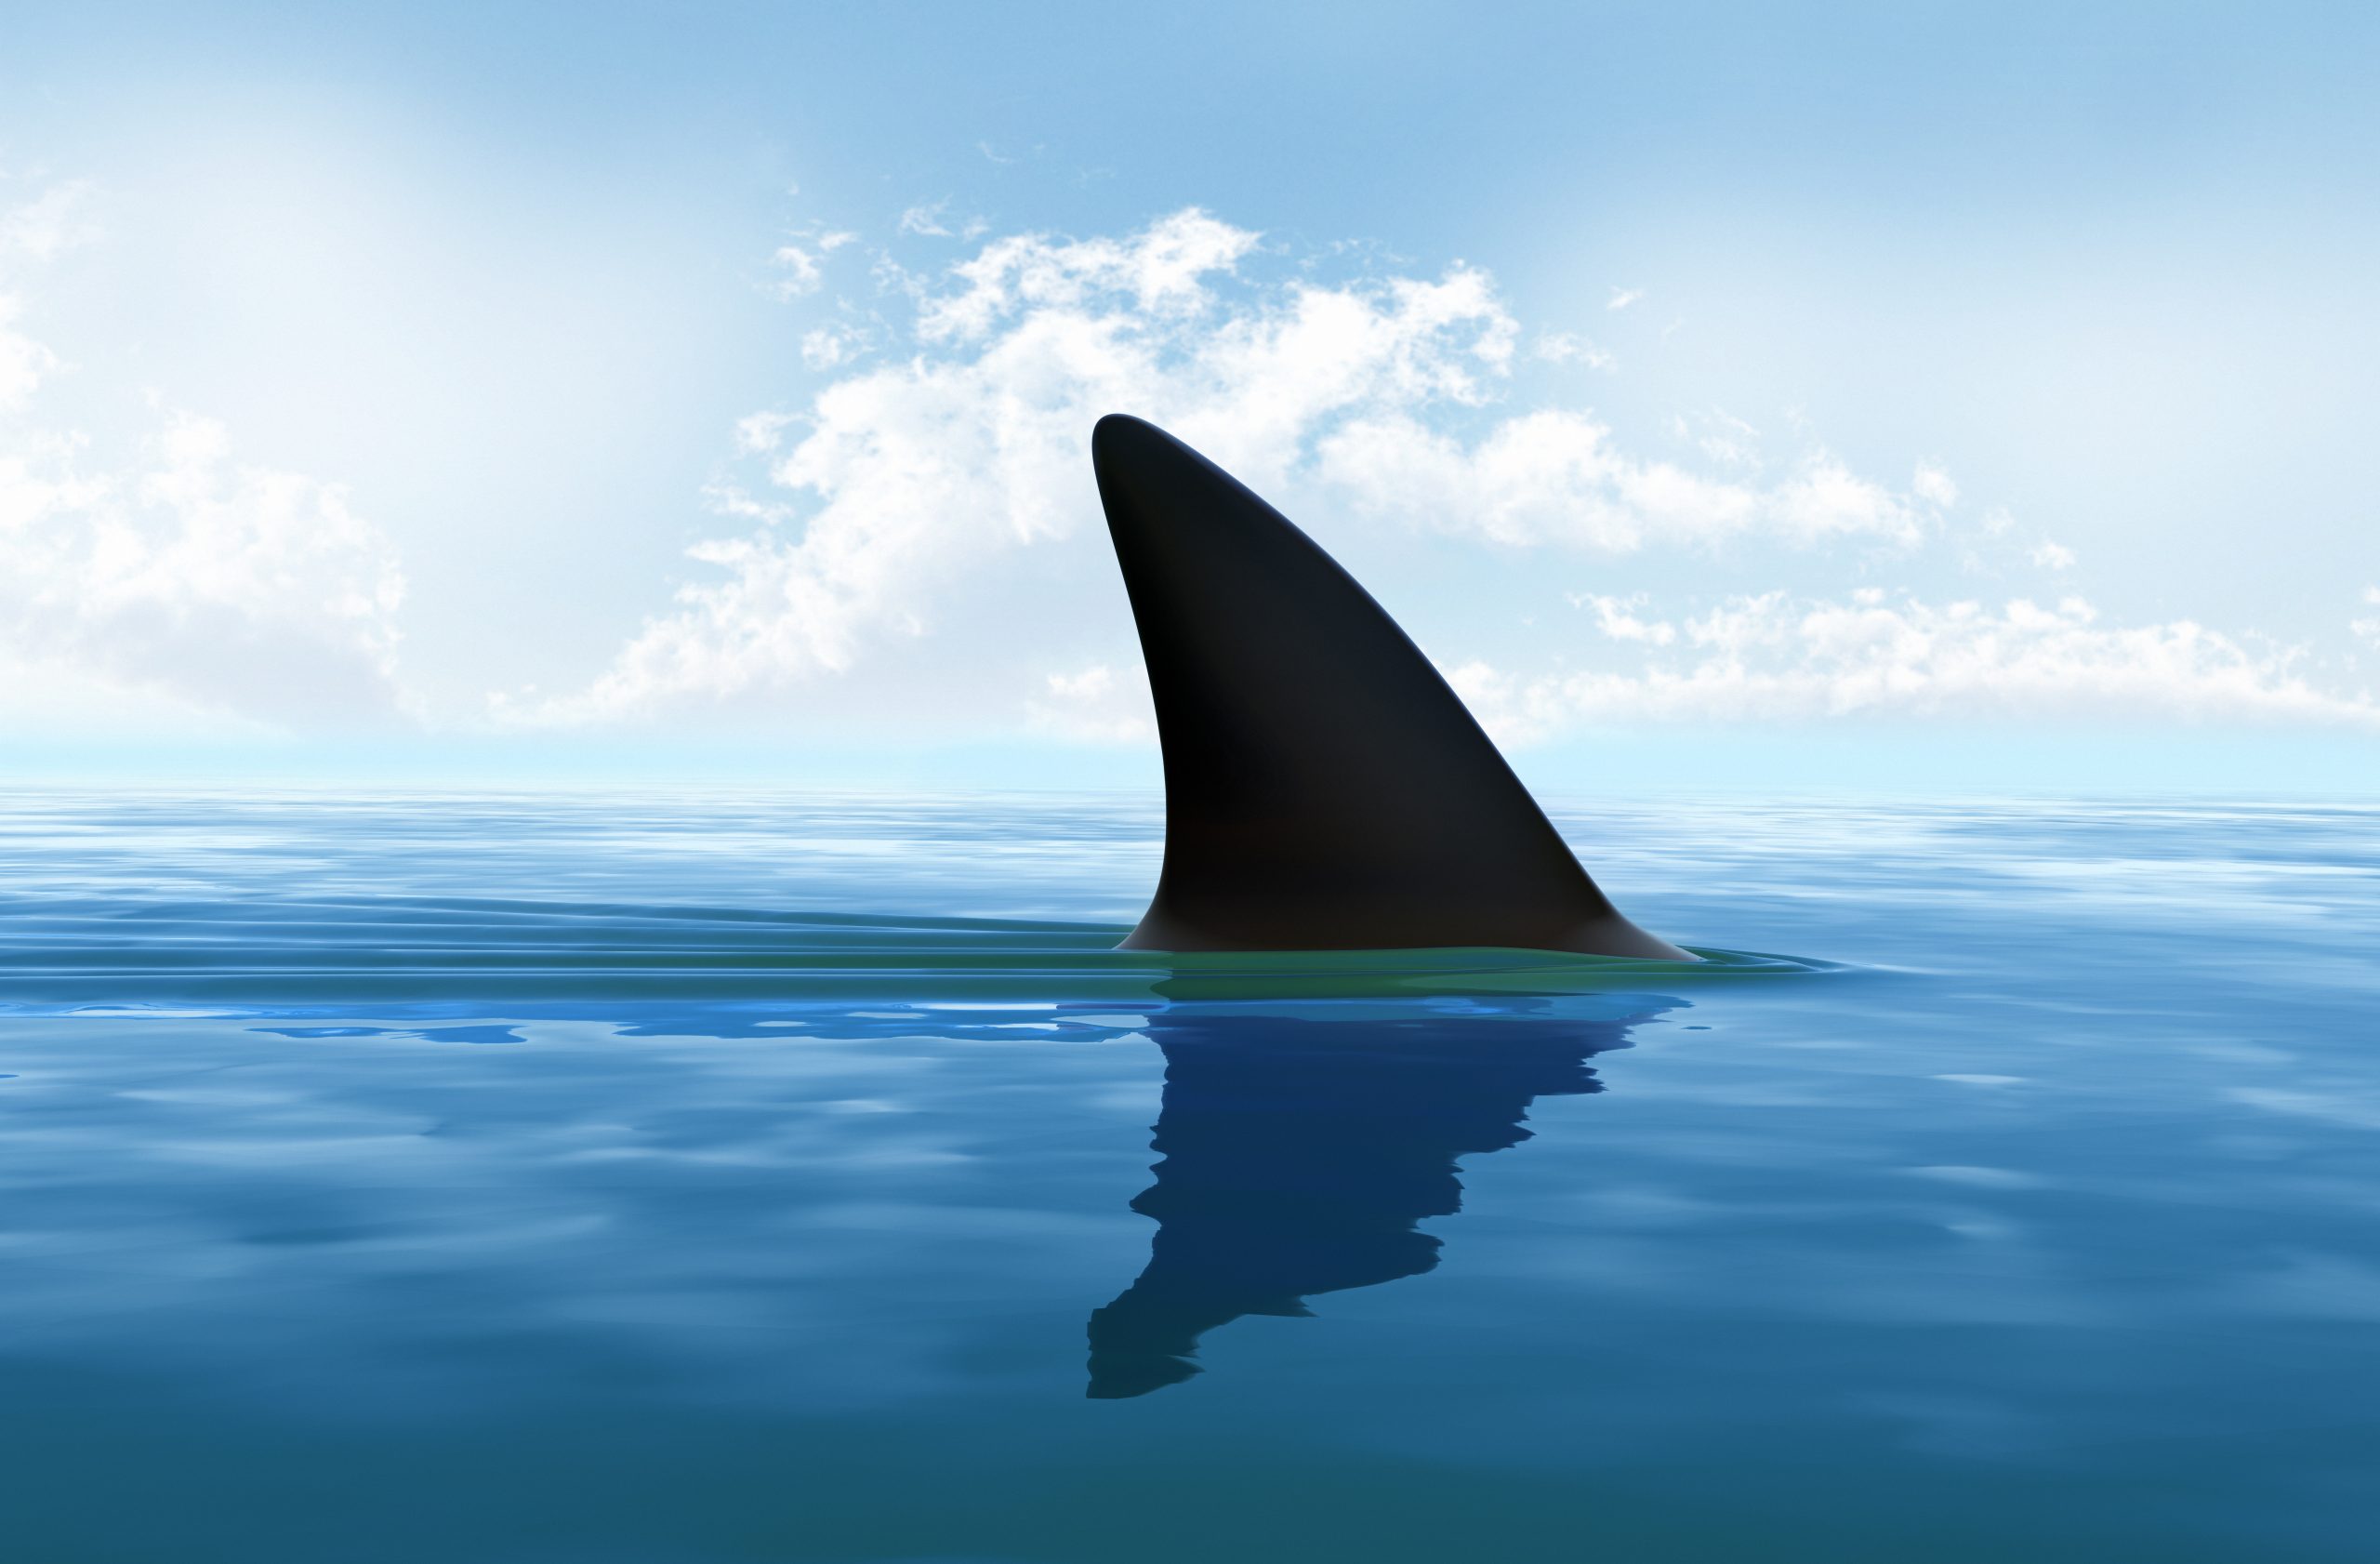 Patent Filings shark in water - https://depositphotos.com/60149289/stock-photo-shark-fin-above-water.html